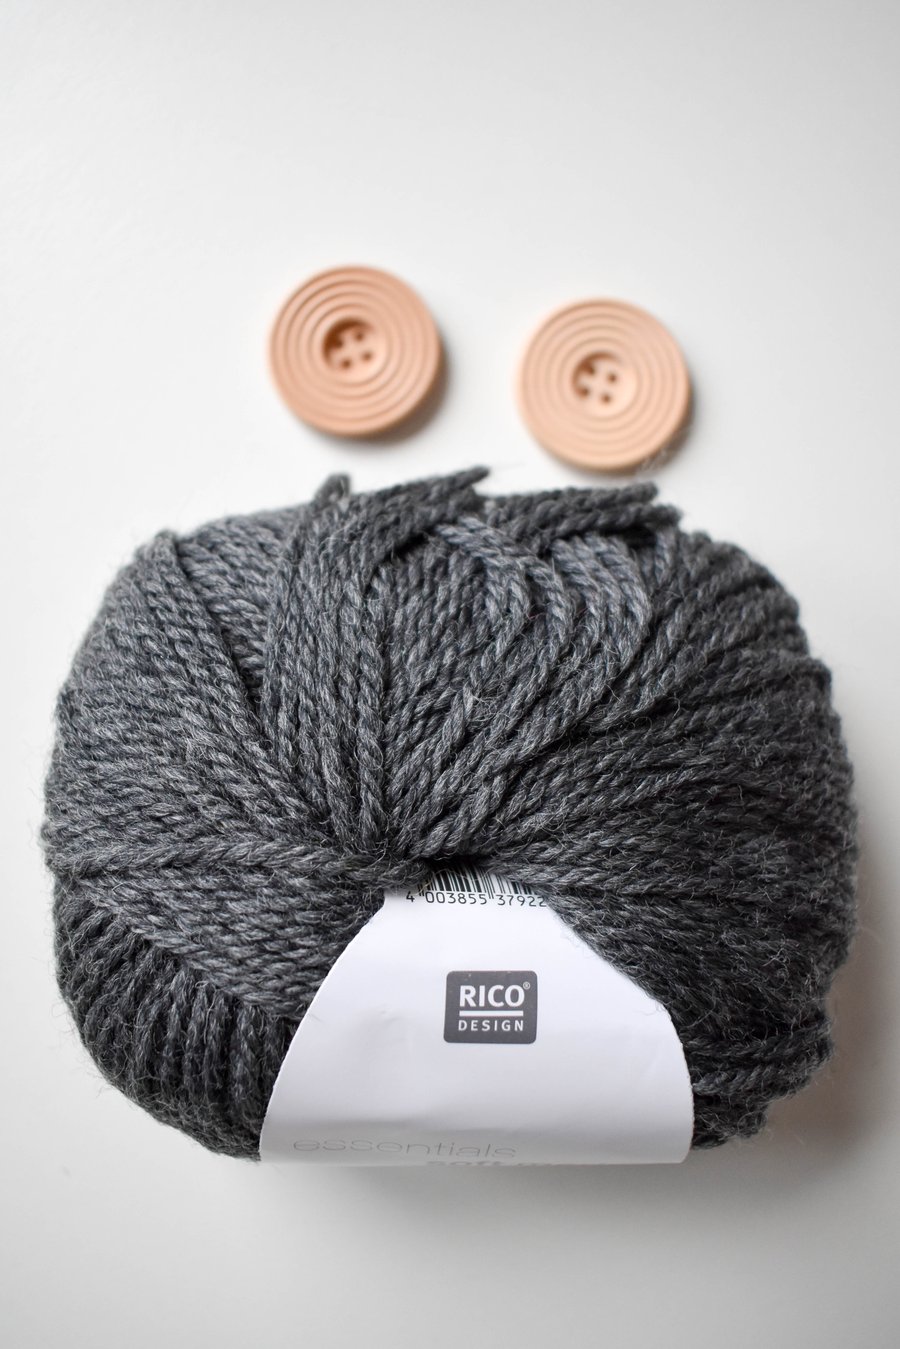 Triple braid headband kit - Knitting, crafts, handmade - Charcoal Grey